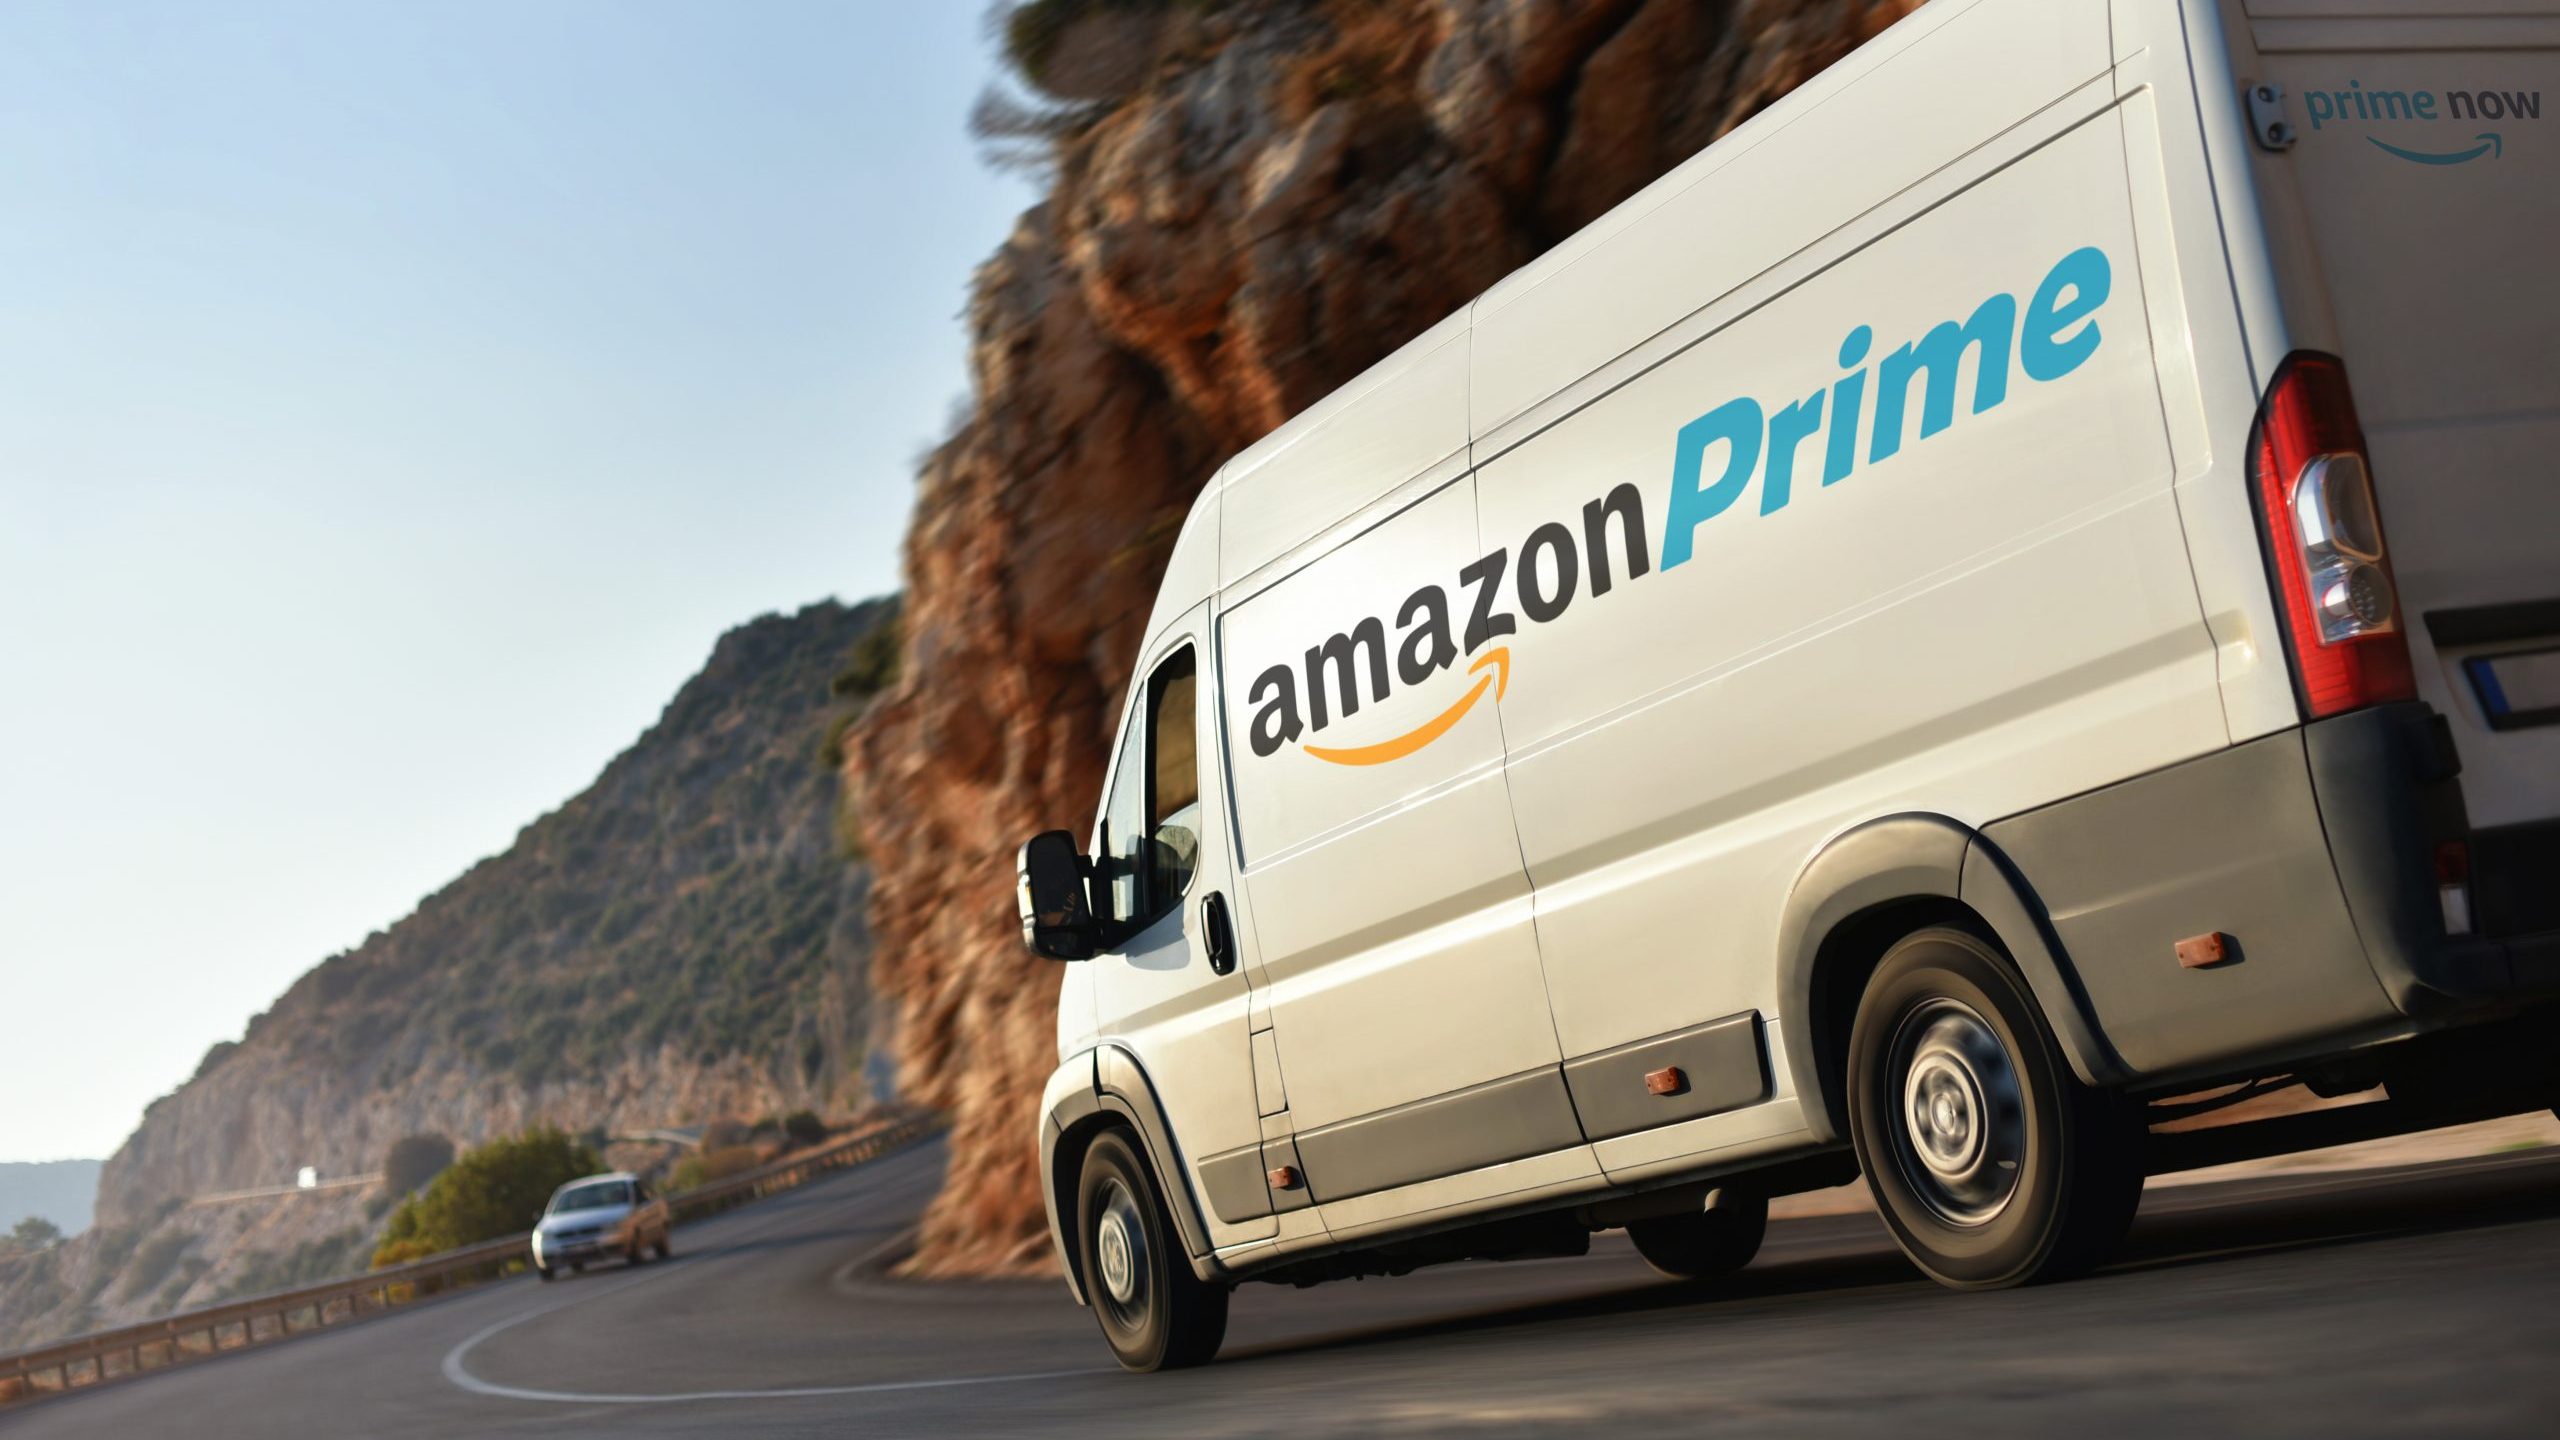 Amazon Prime truck drives down road